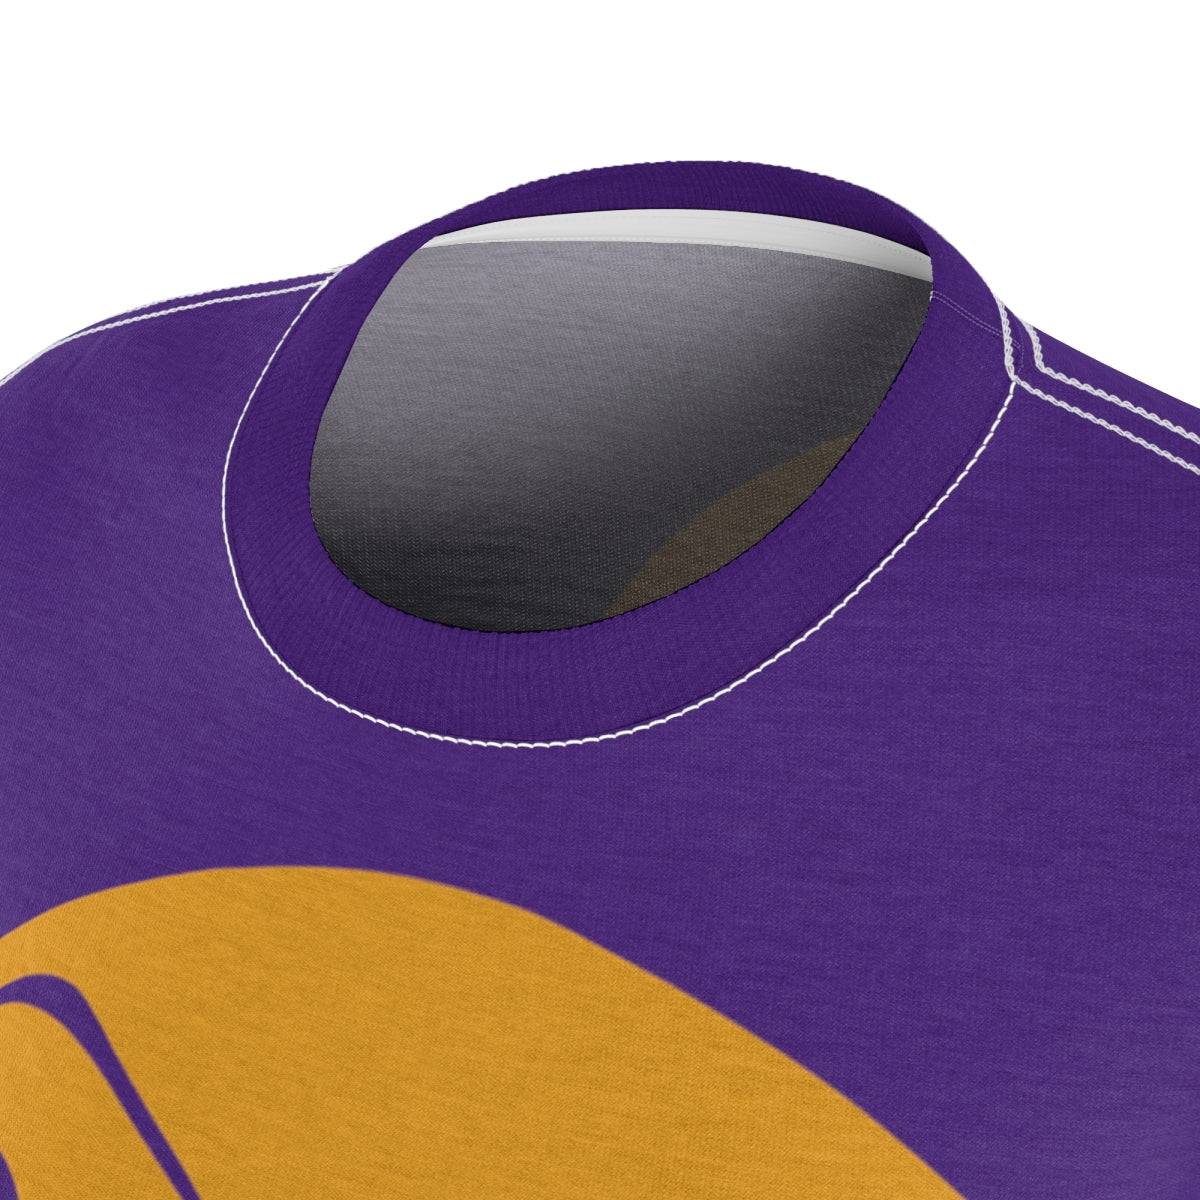 T-Shirt, Purple Spooky Face Motive